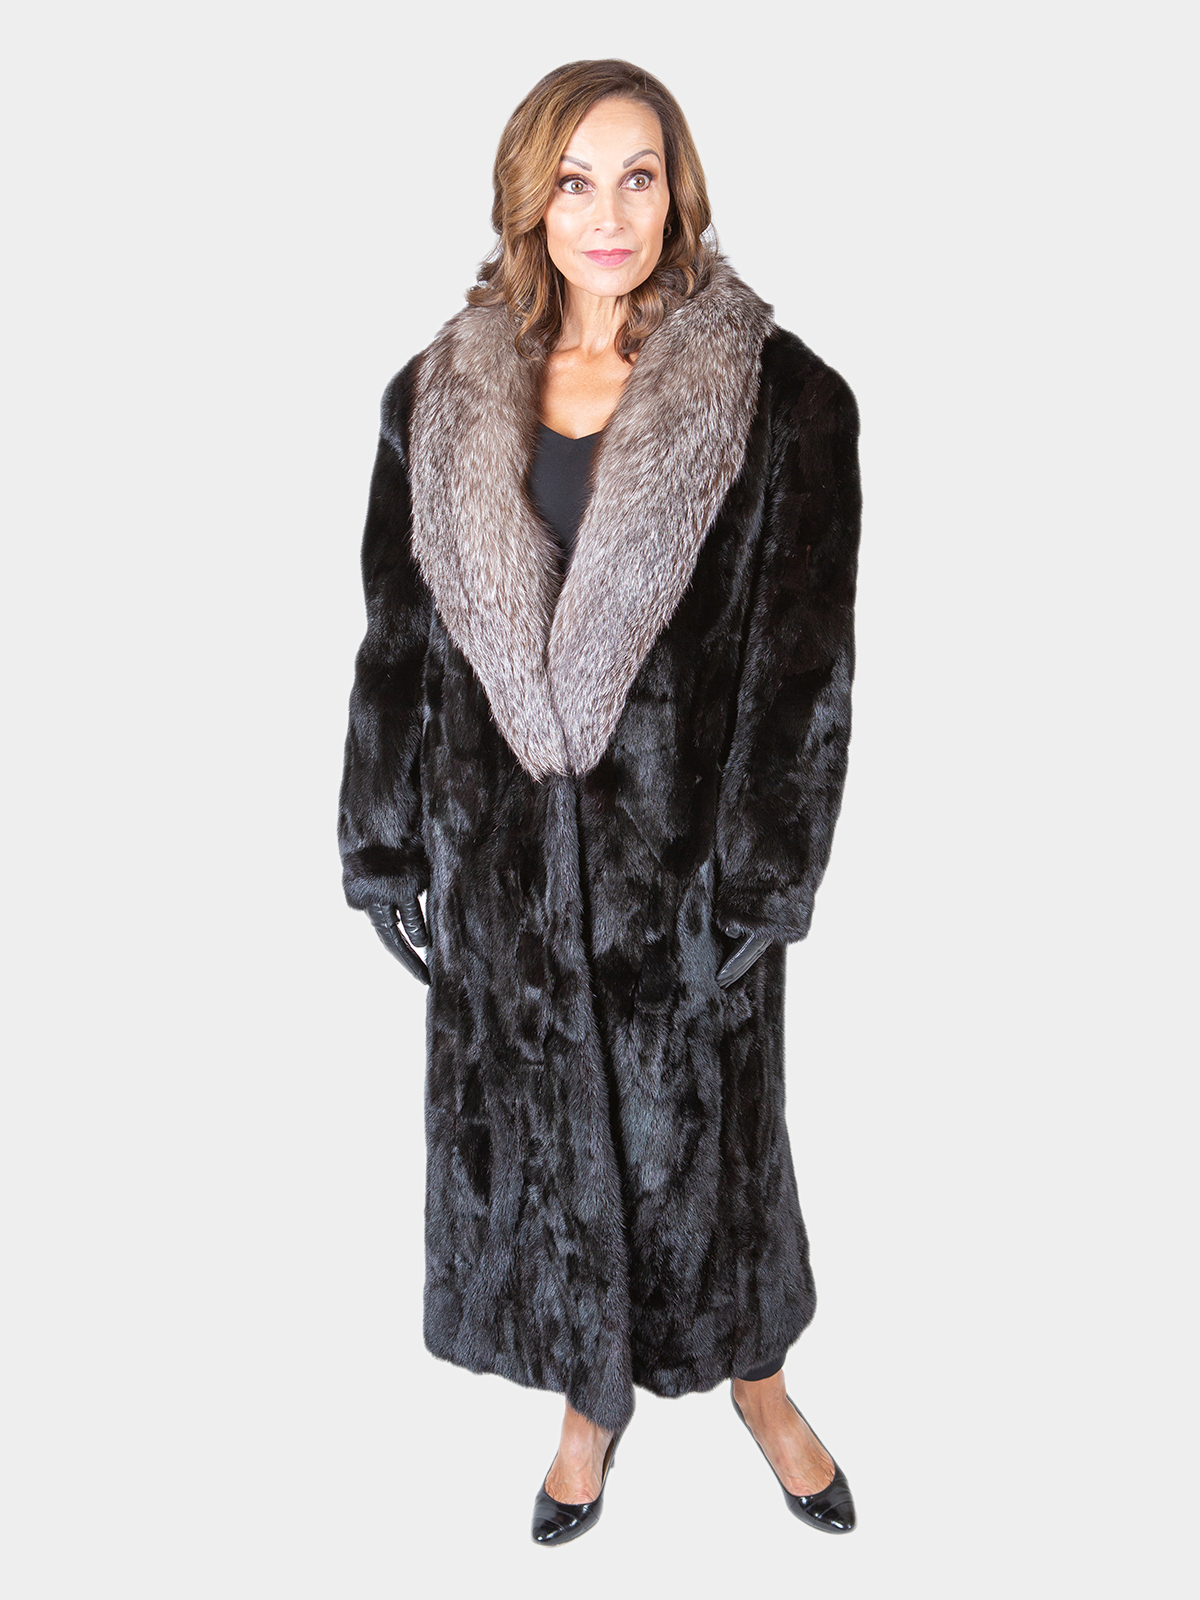 Black Mink Coat With Indigo fox Sleeves And Collar XL (16)– Purple